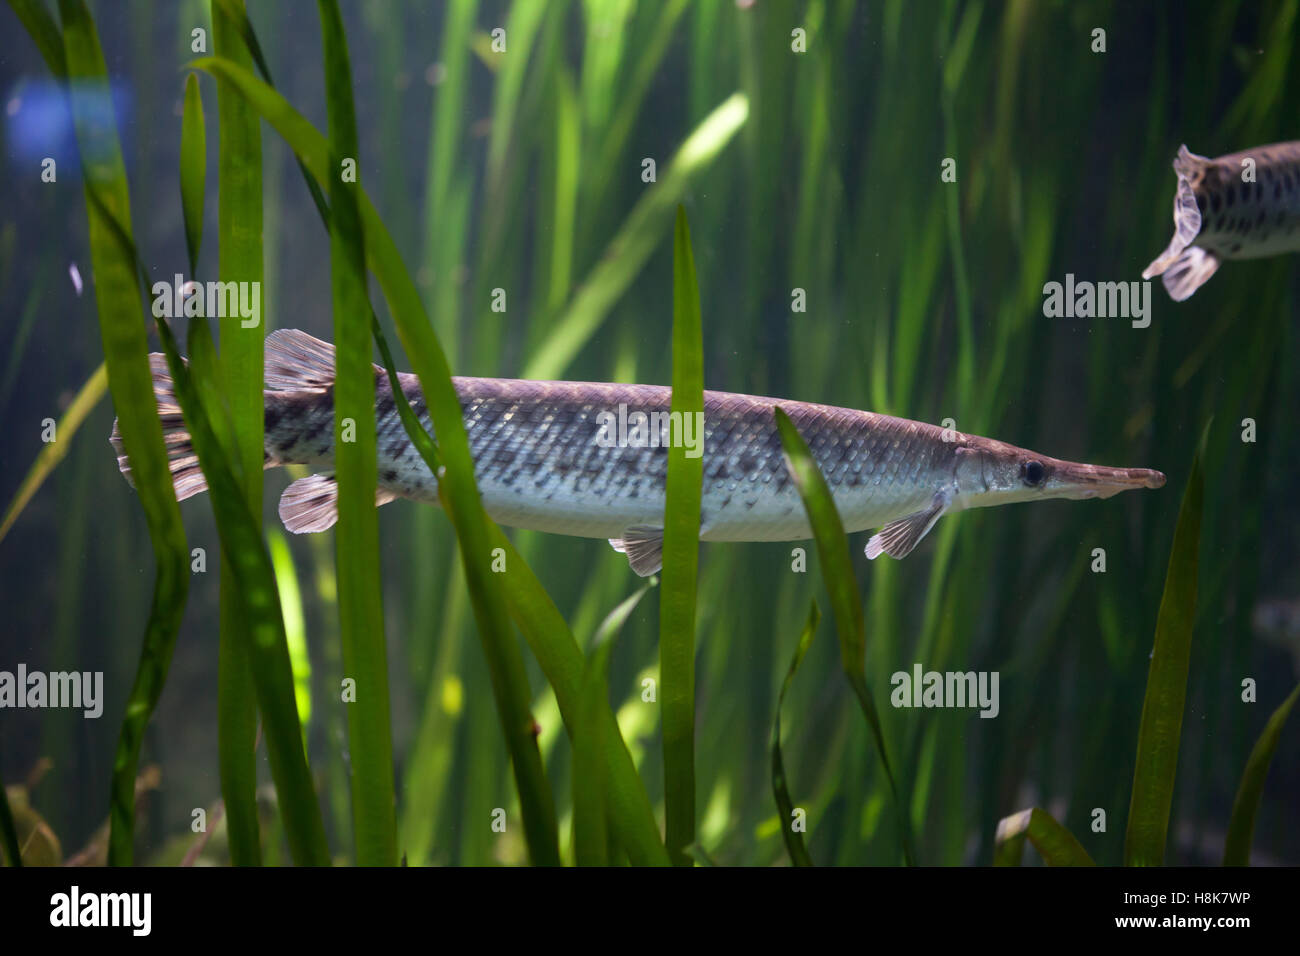 Spotted gar (Lepisosteus oculatus). Freshwater fish. Stock Photo